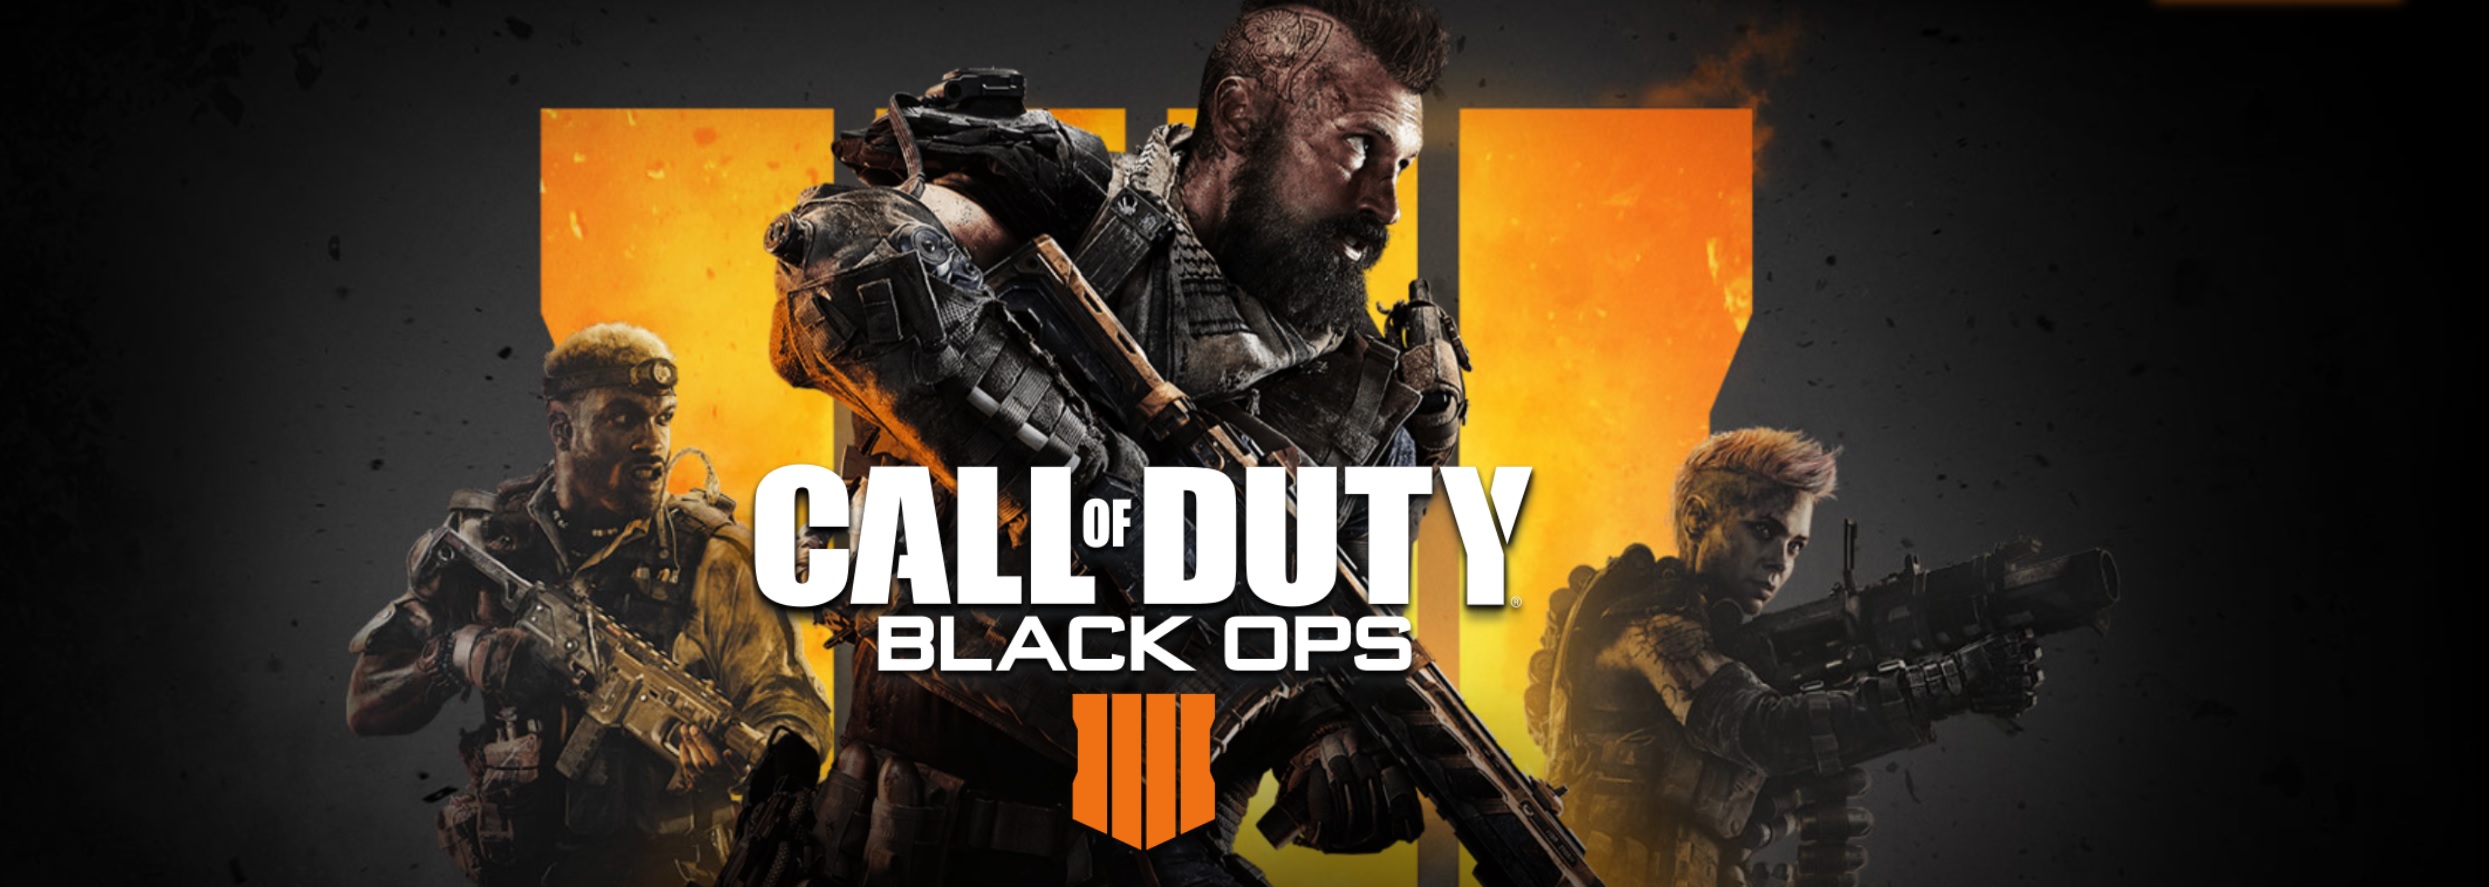 Call of Duty Black Ops 4 - Multijouer Multiplayer